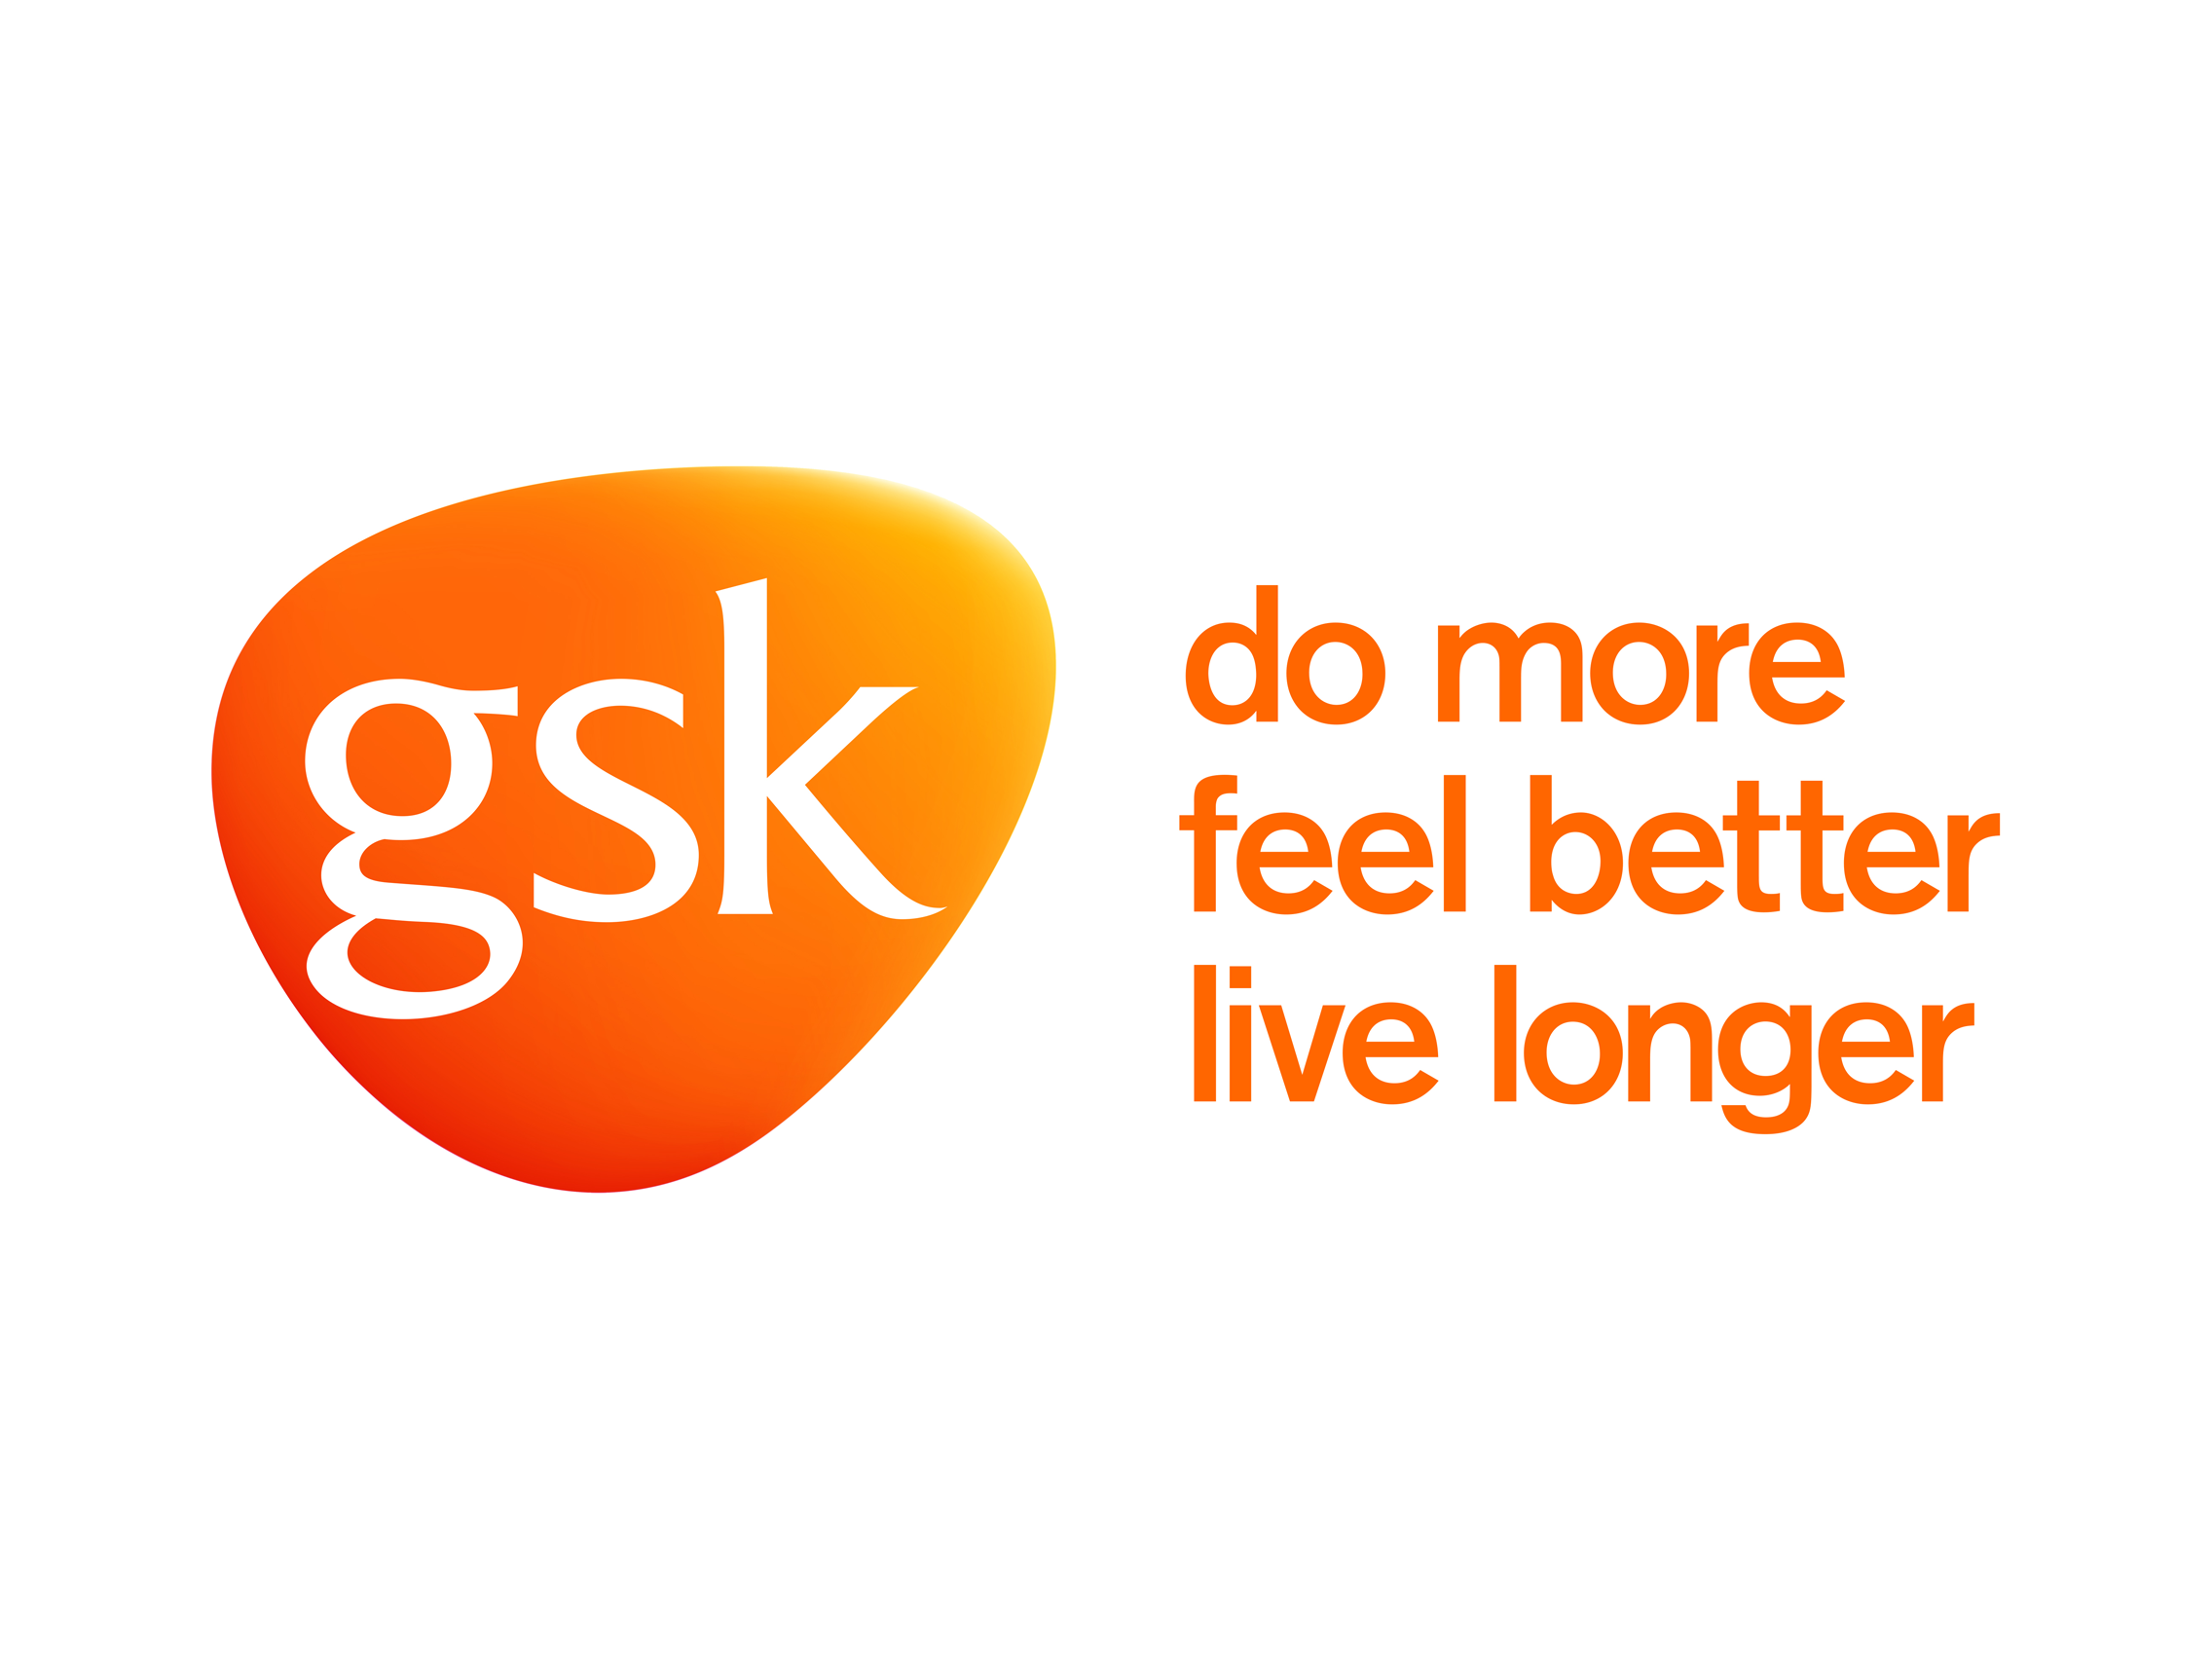 Gsk-logo-png-image-informatio